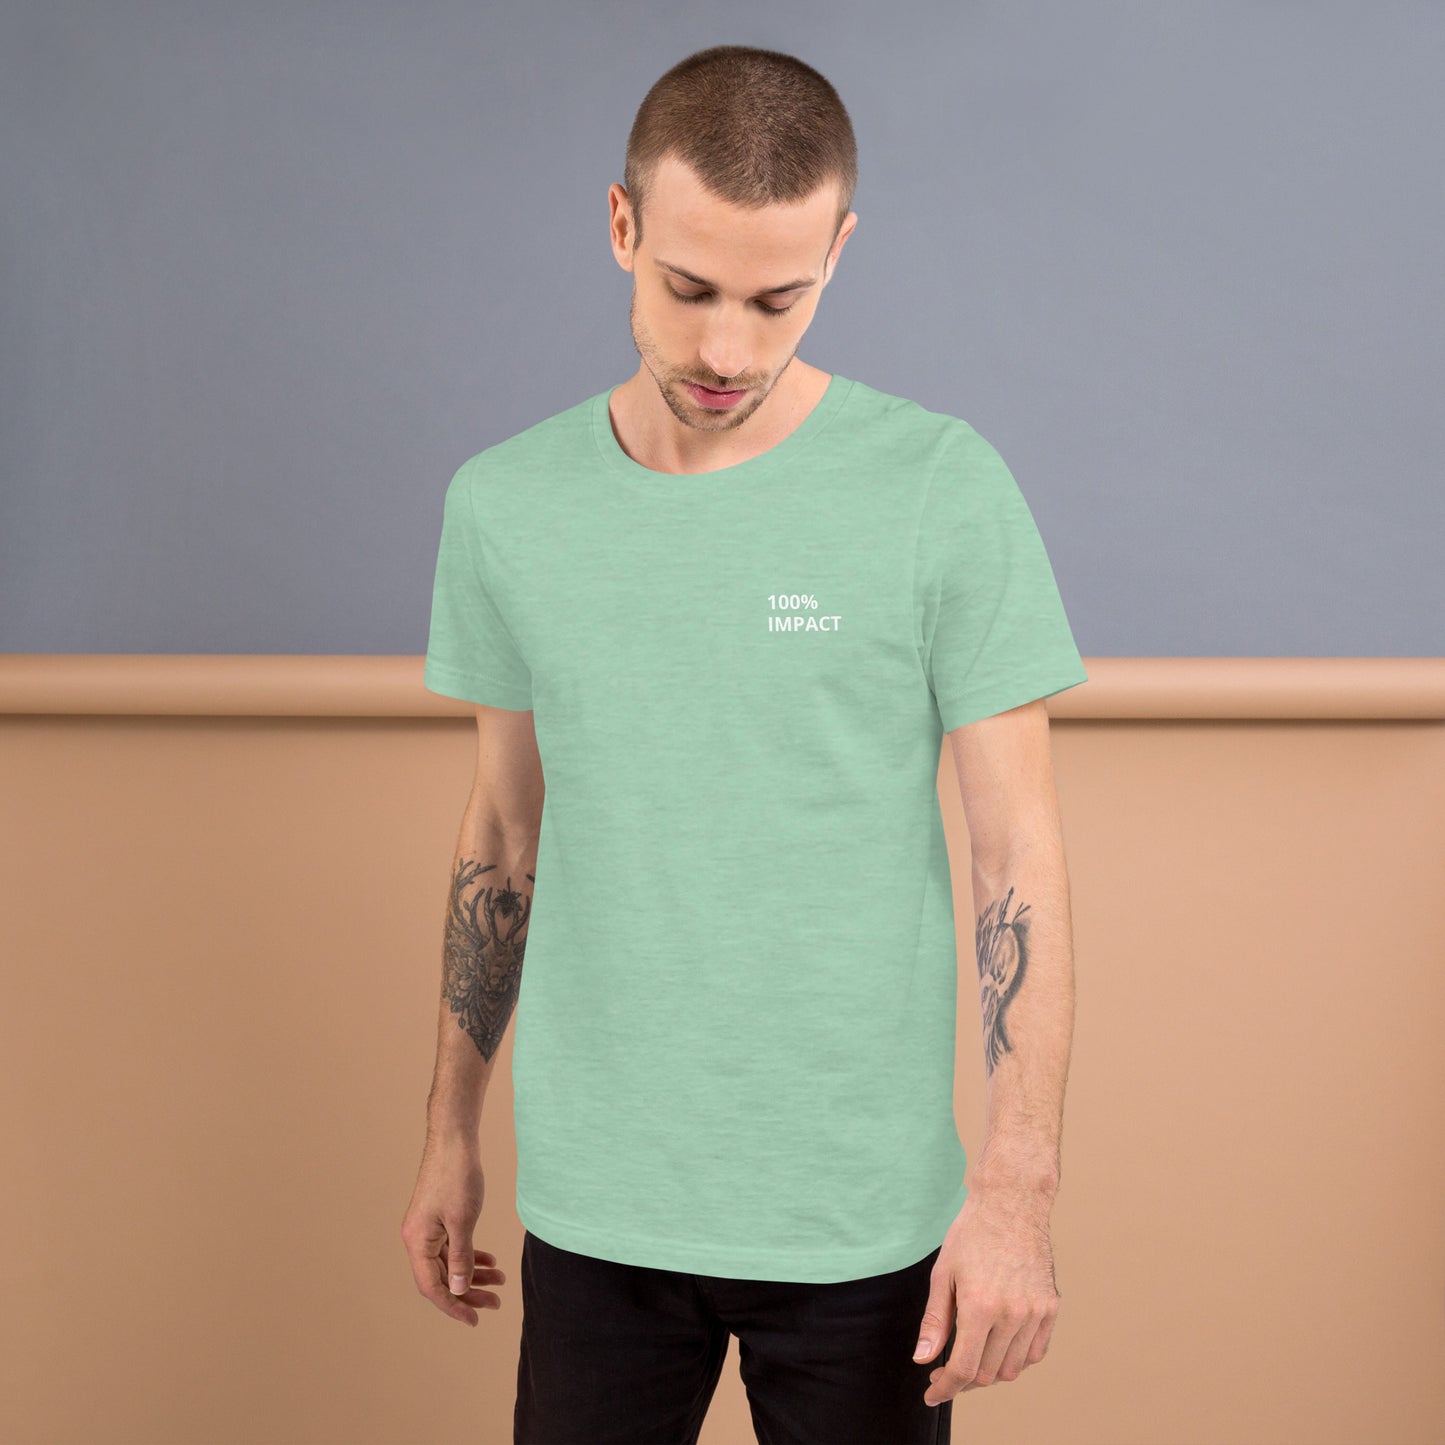 100% IMPACT Unisex T-Shirt Green